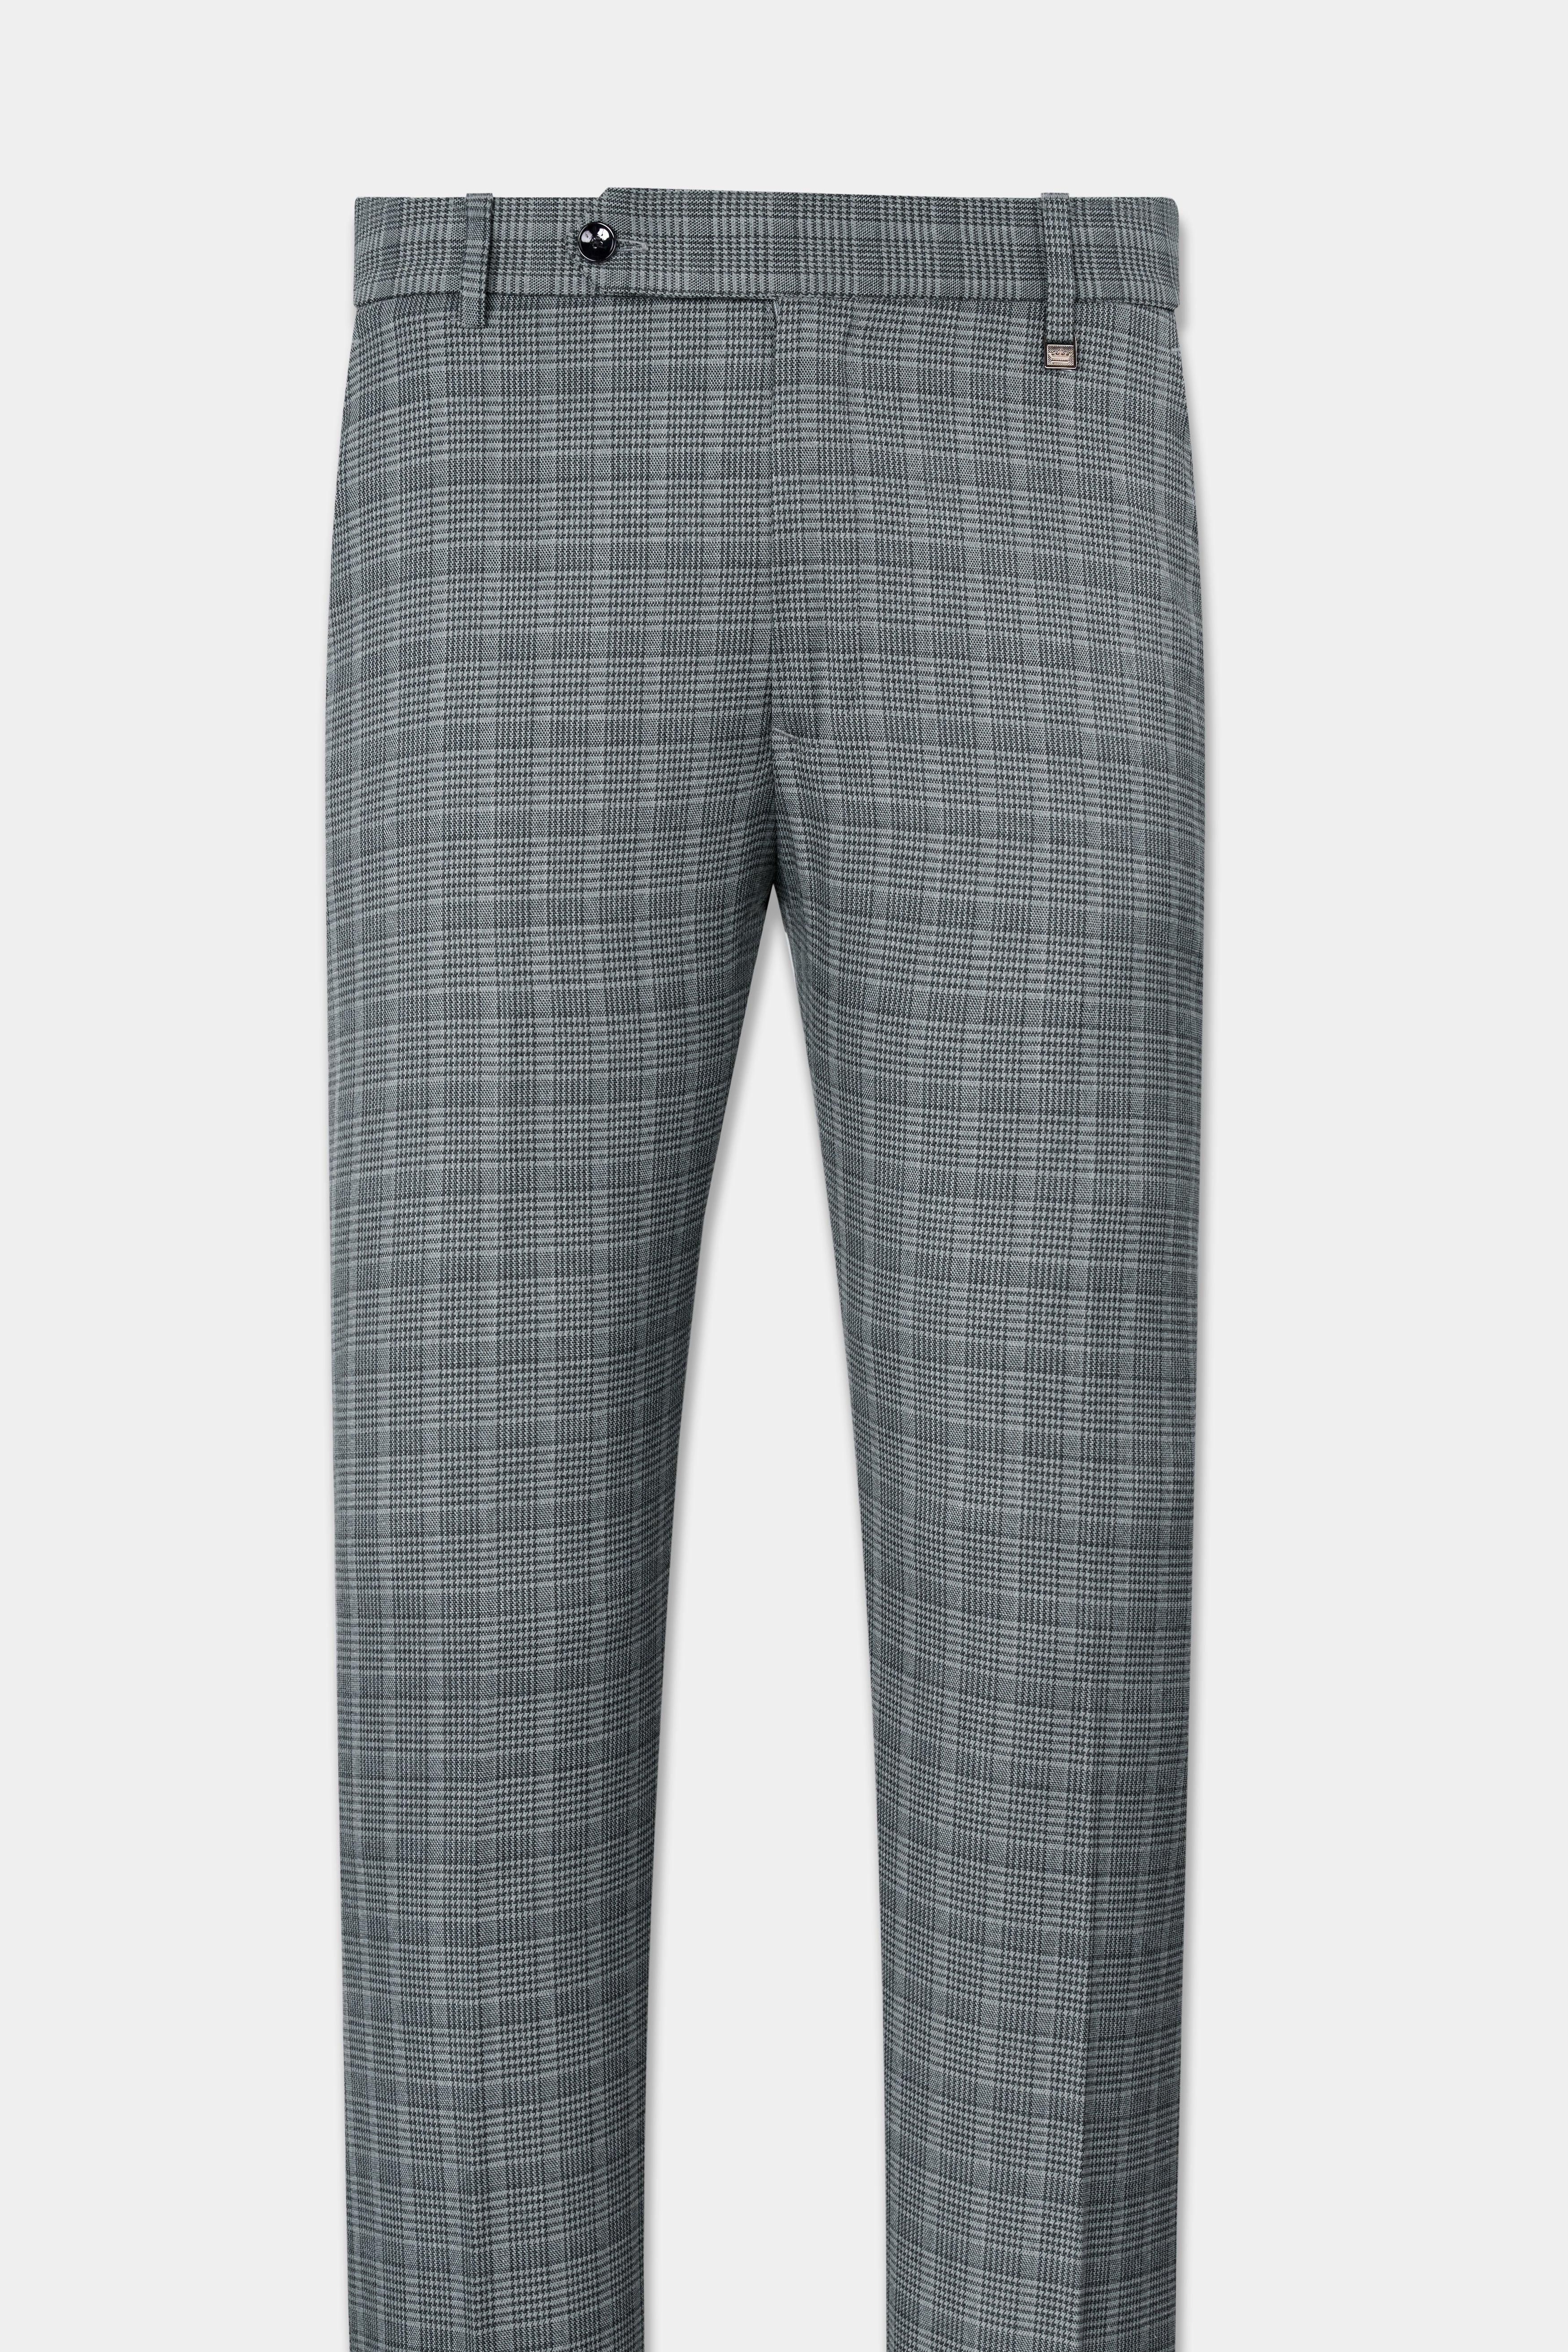 Oslo Gray Checkered Wool Rich Pant T2801-28, T2801-30, T2801-32, T2801-34, T2801-36, T2801-38, T2801-40, T2801-42, T2801-44